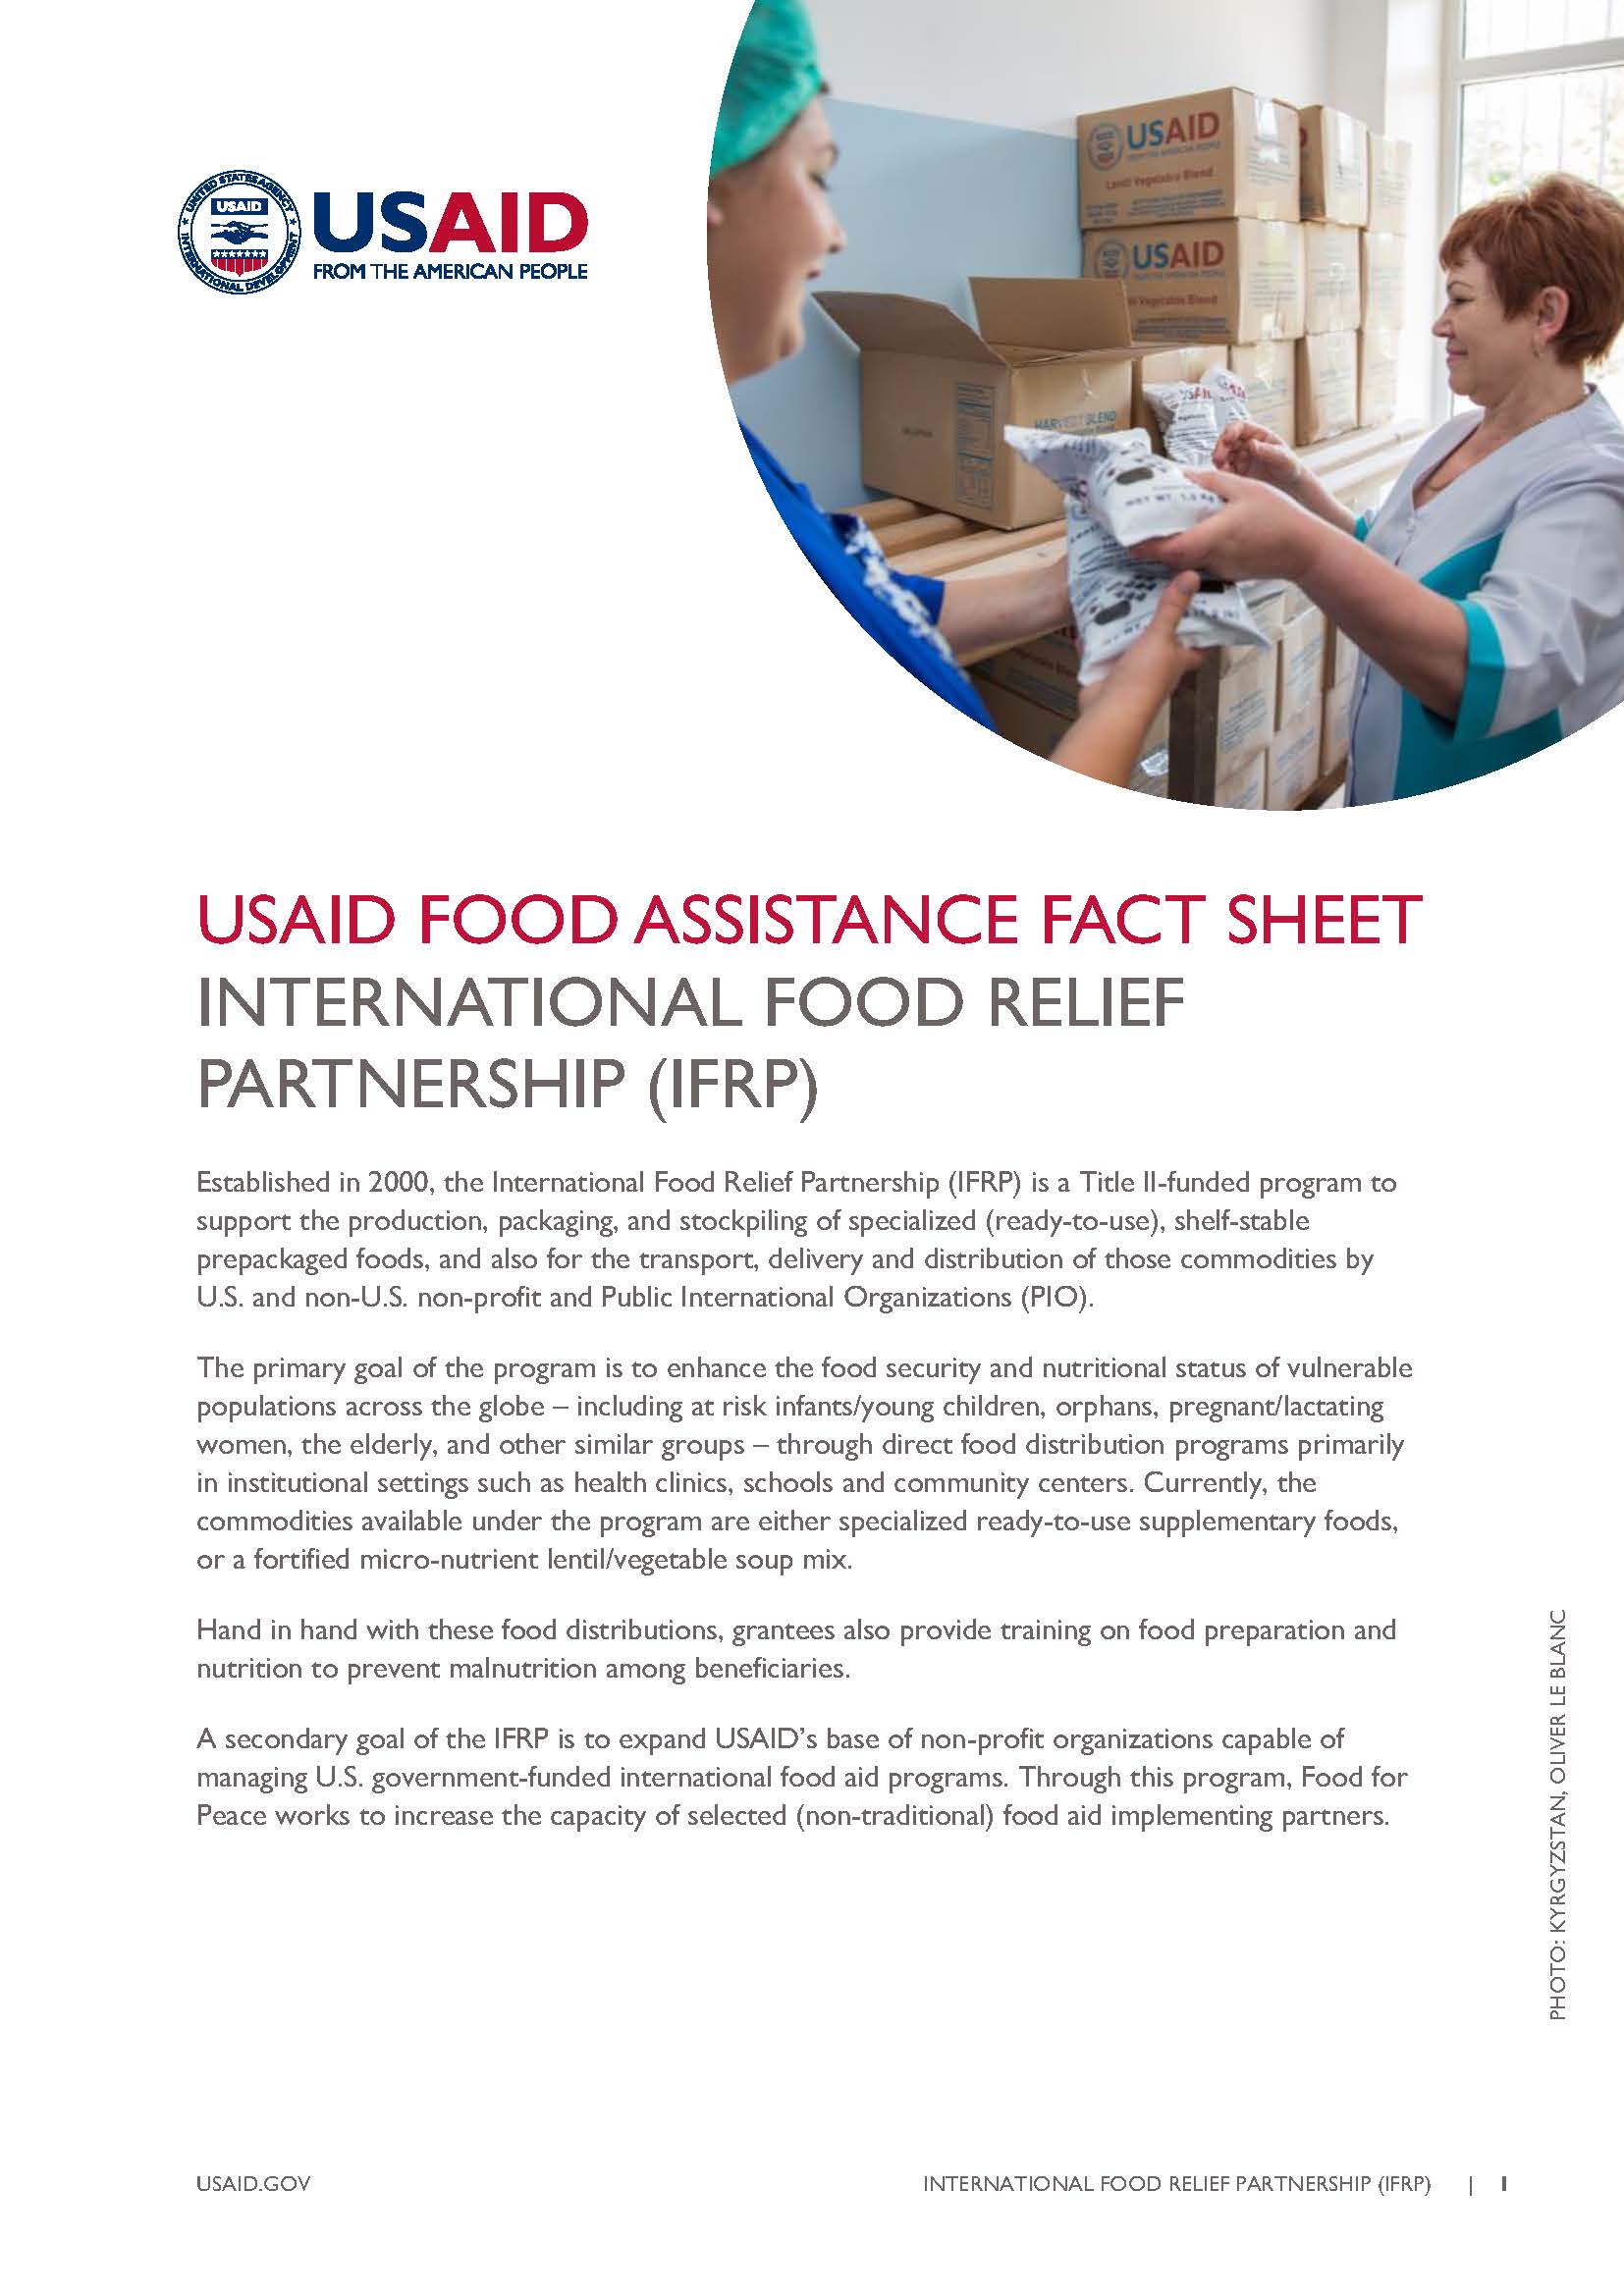 FFP Fact Sheet on International Food Relief Partnership (IFRP)